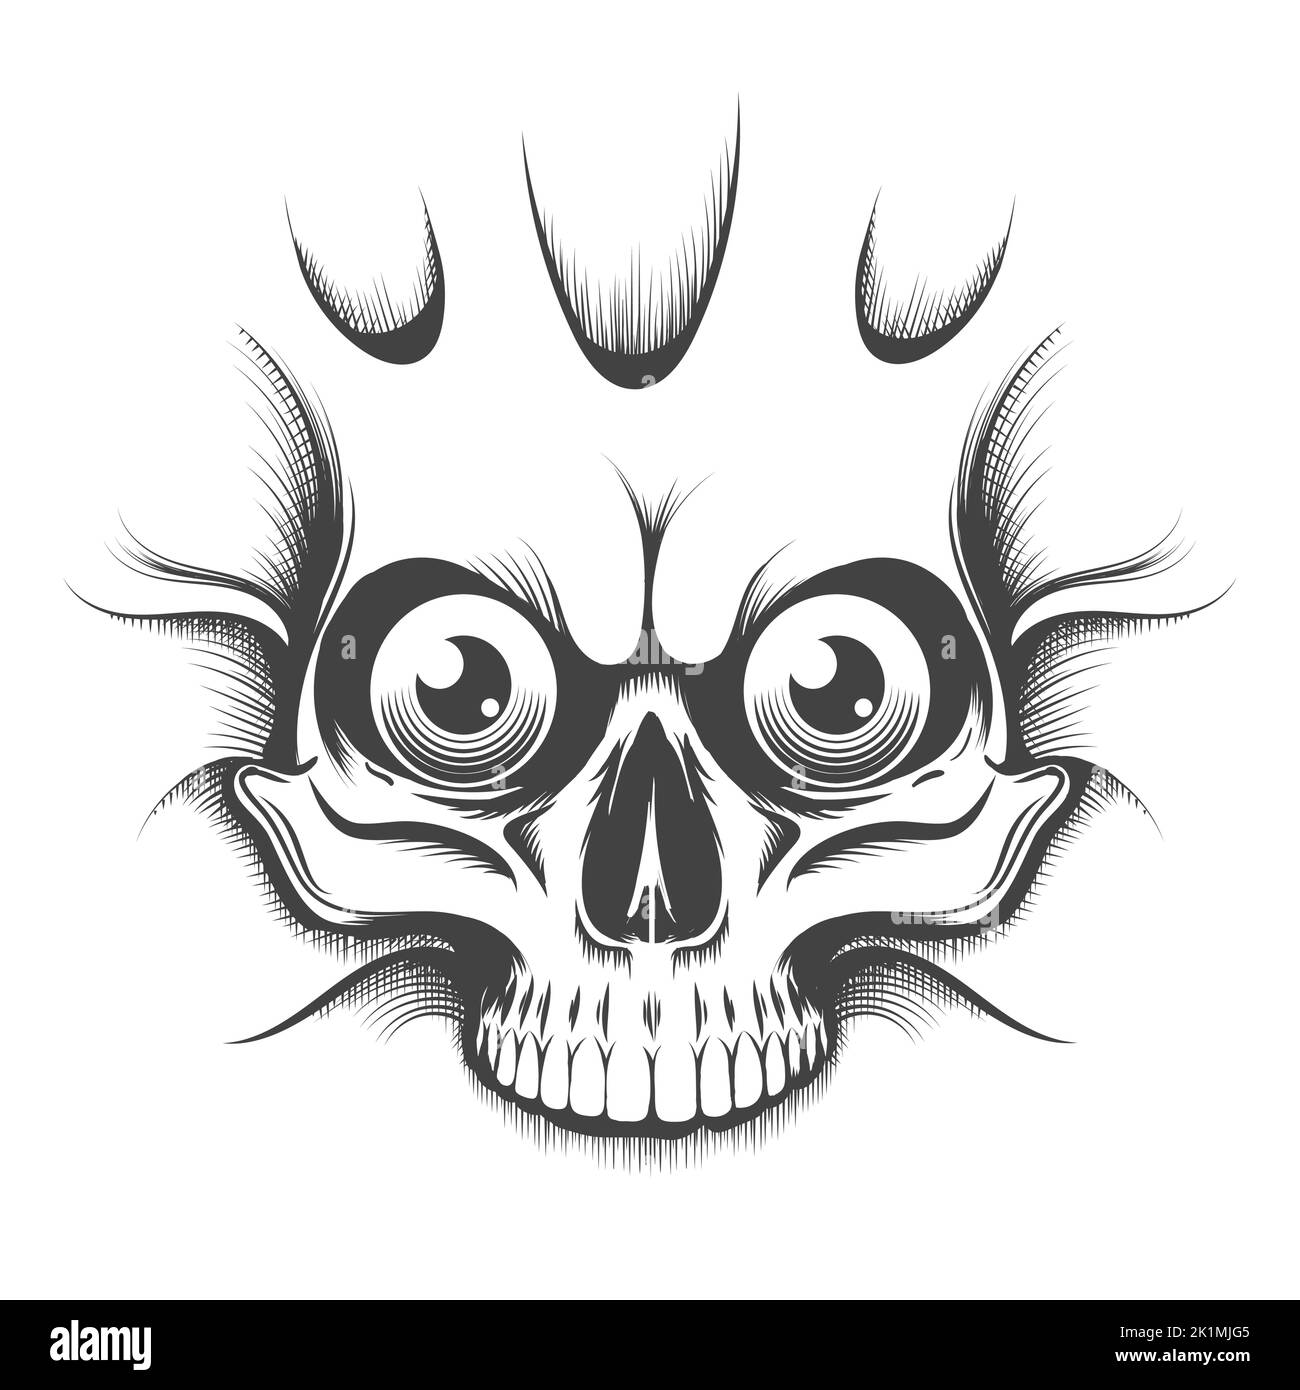 Human Skull Design Template. Vector illustration Isolated on White Background Stock Vector